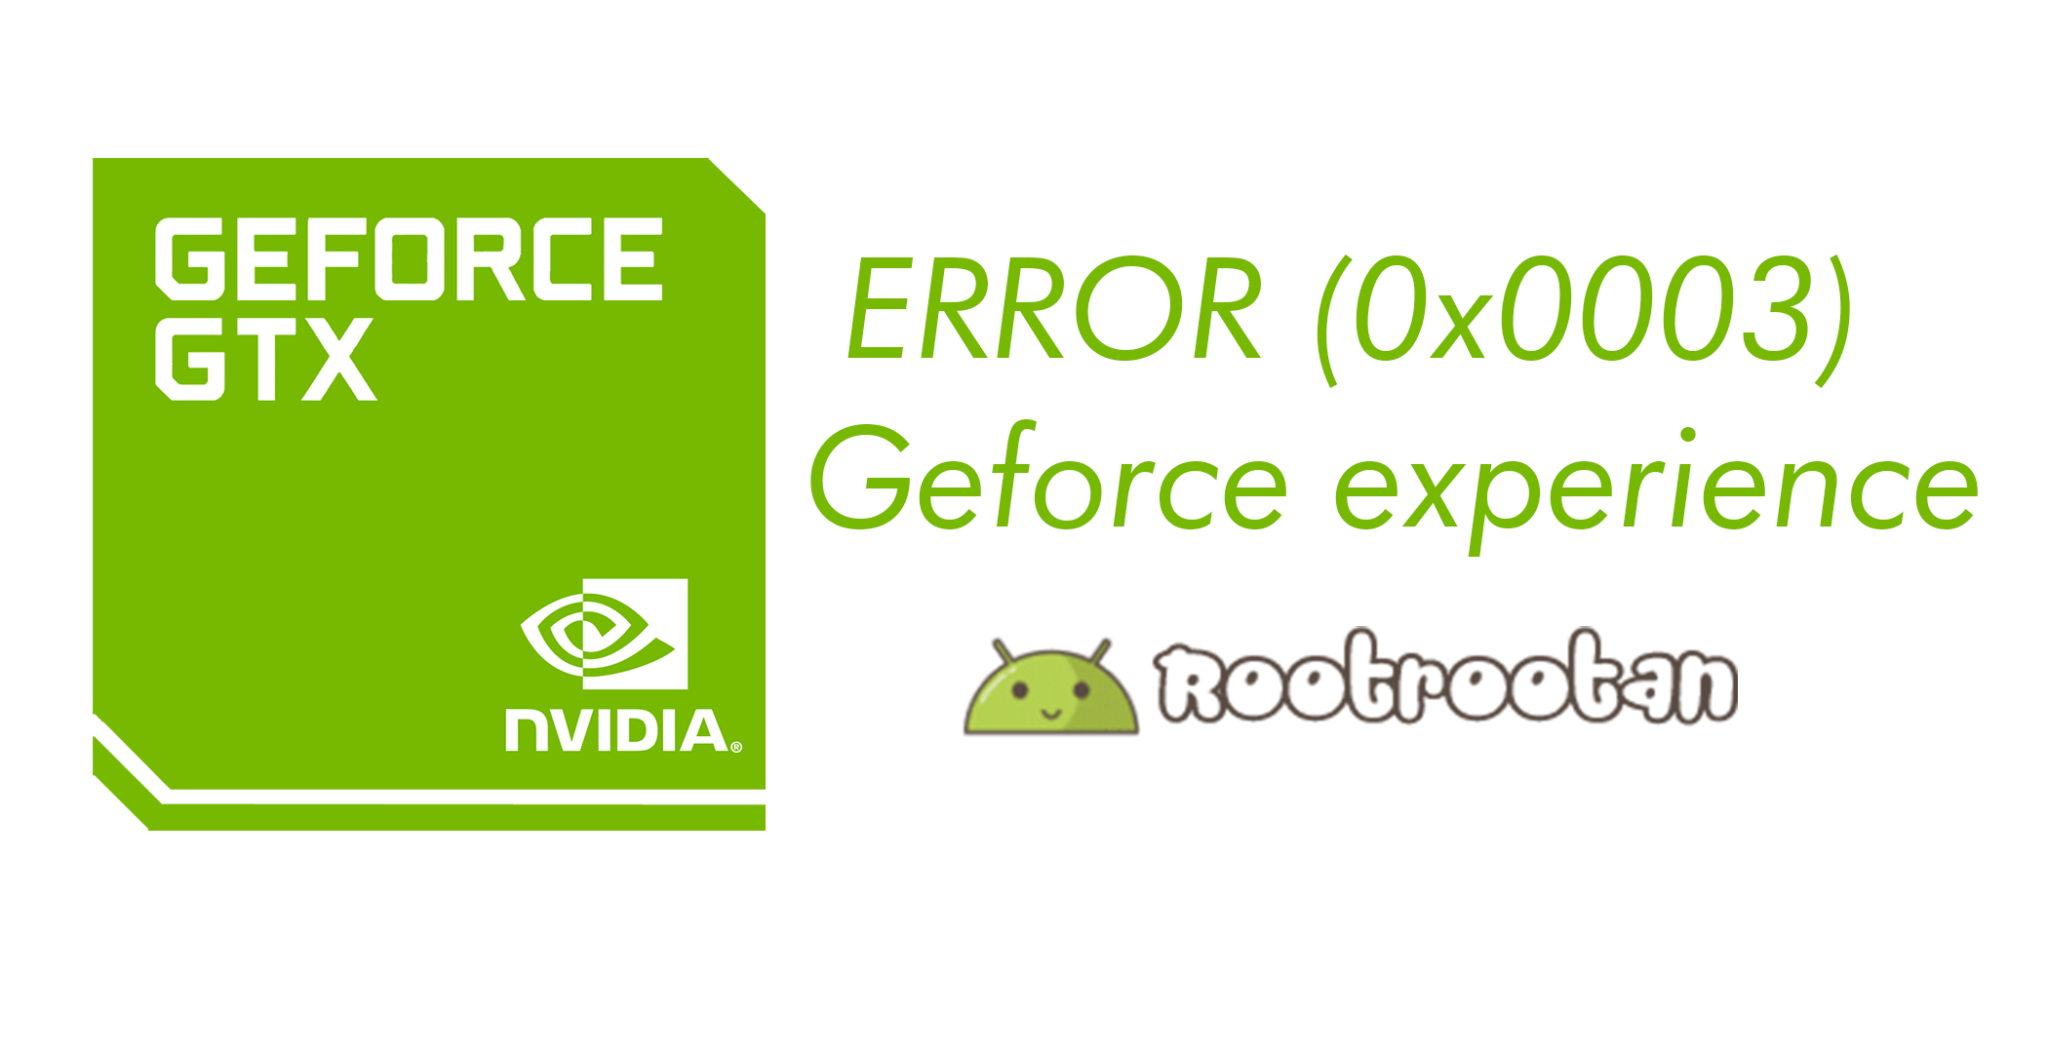 Geforce experience code 0x0003